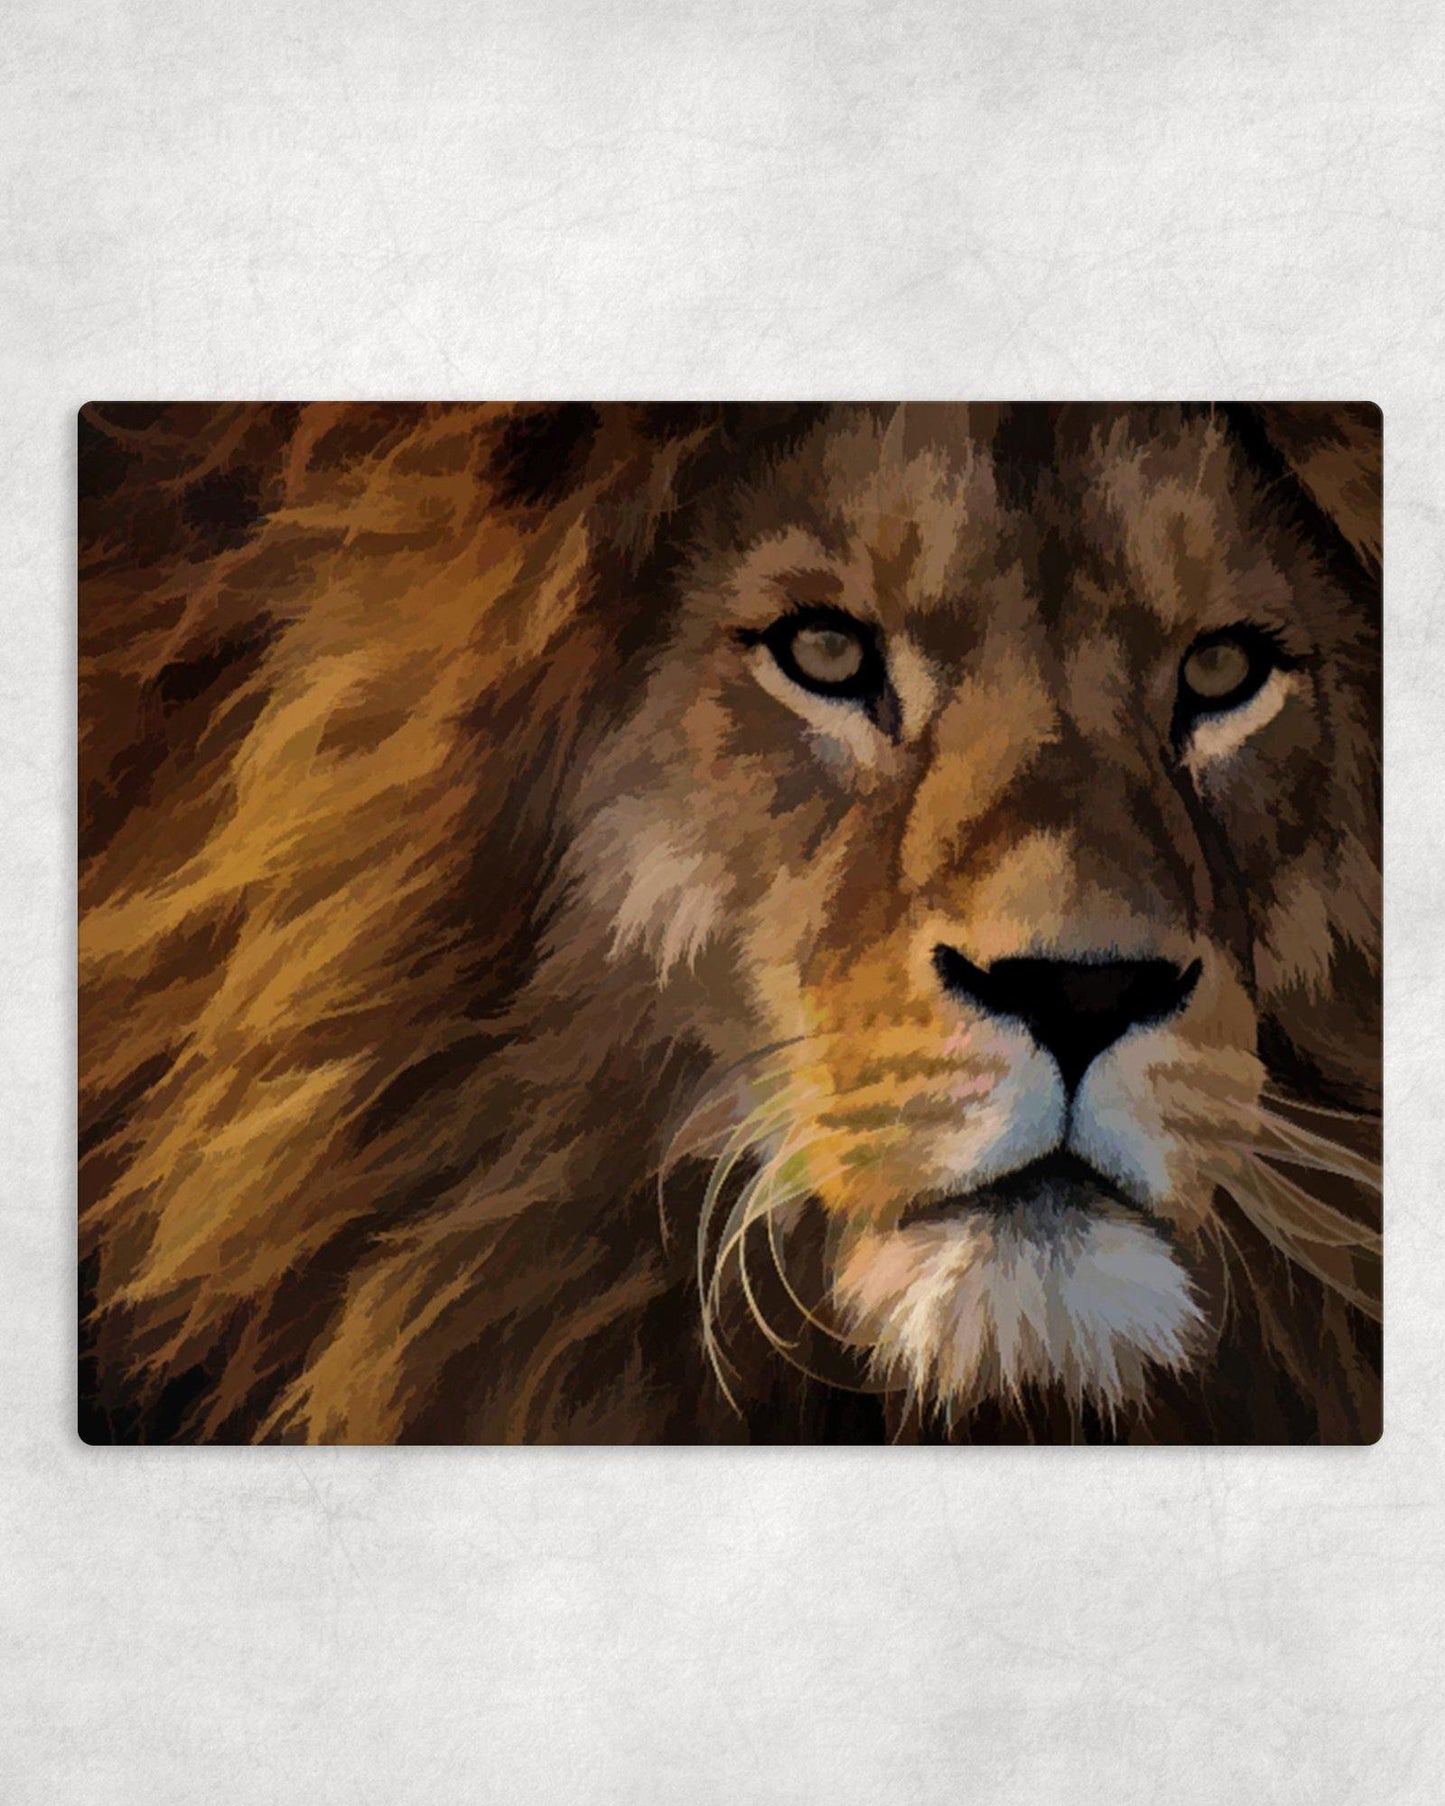 Lion Portrait Metal Photo Panel - 8x10 - Schoppix Gifts